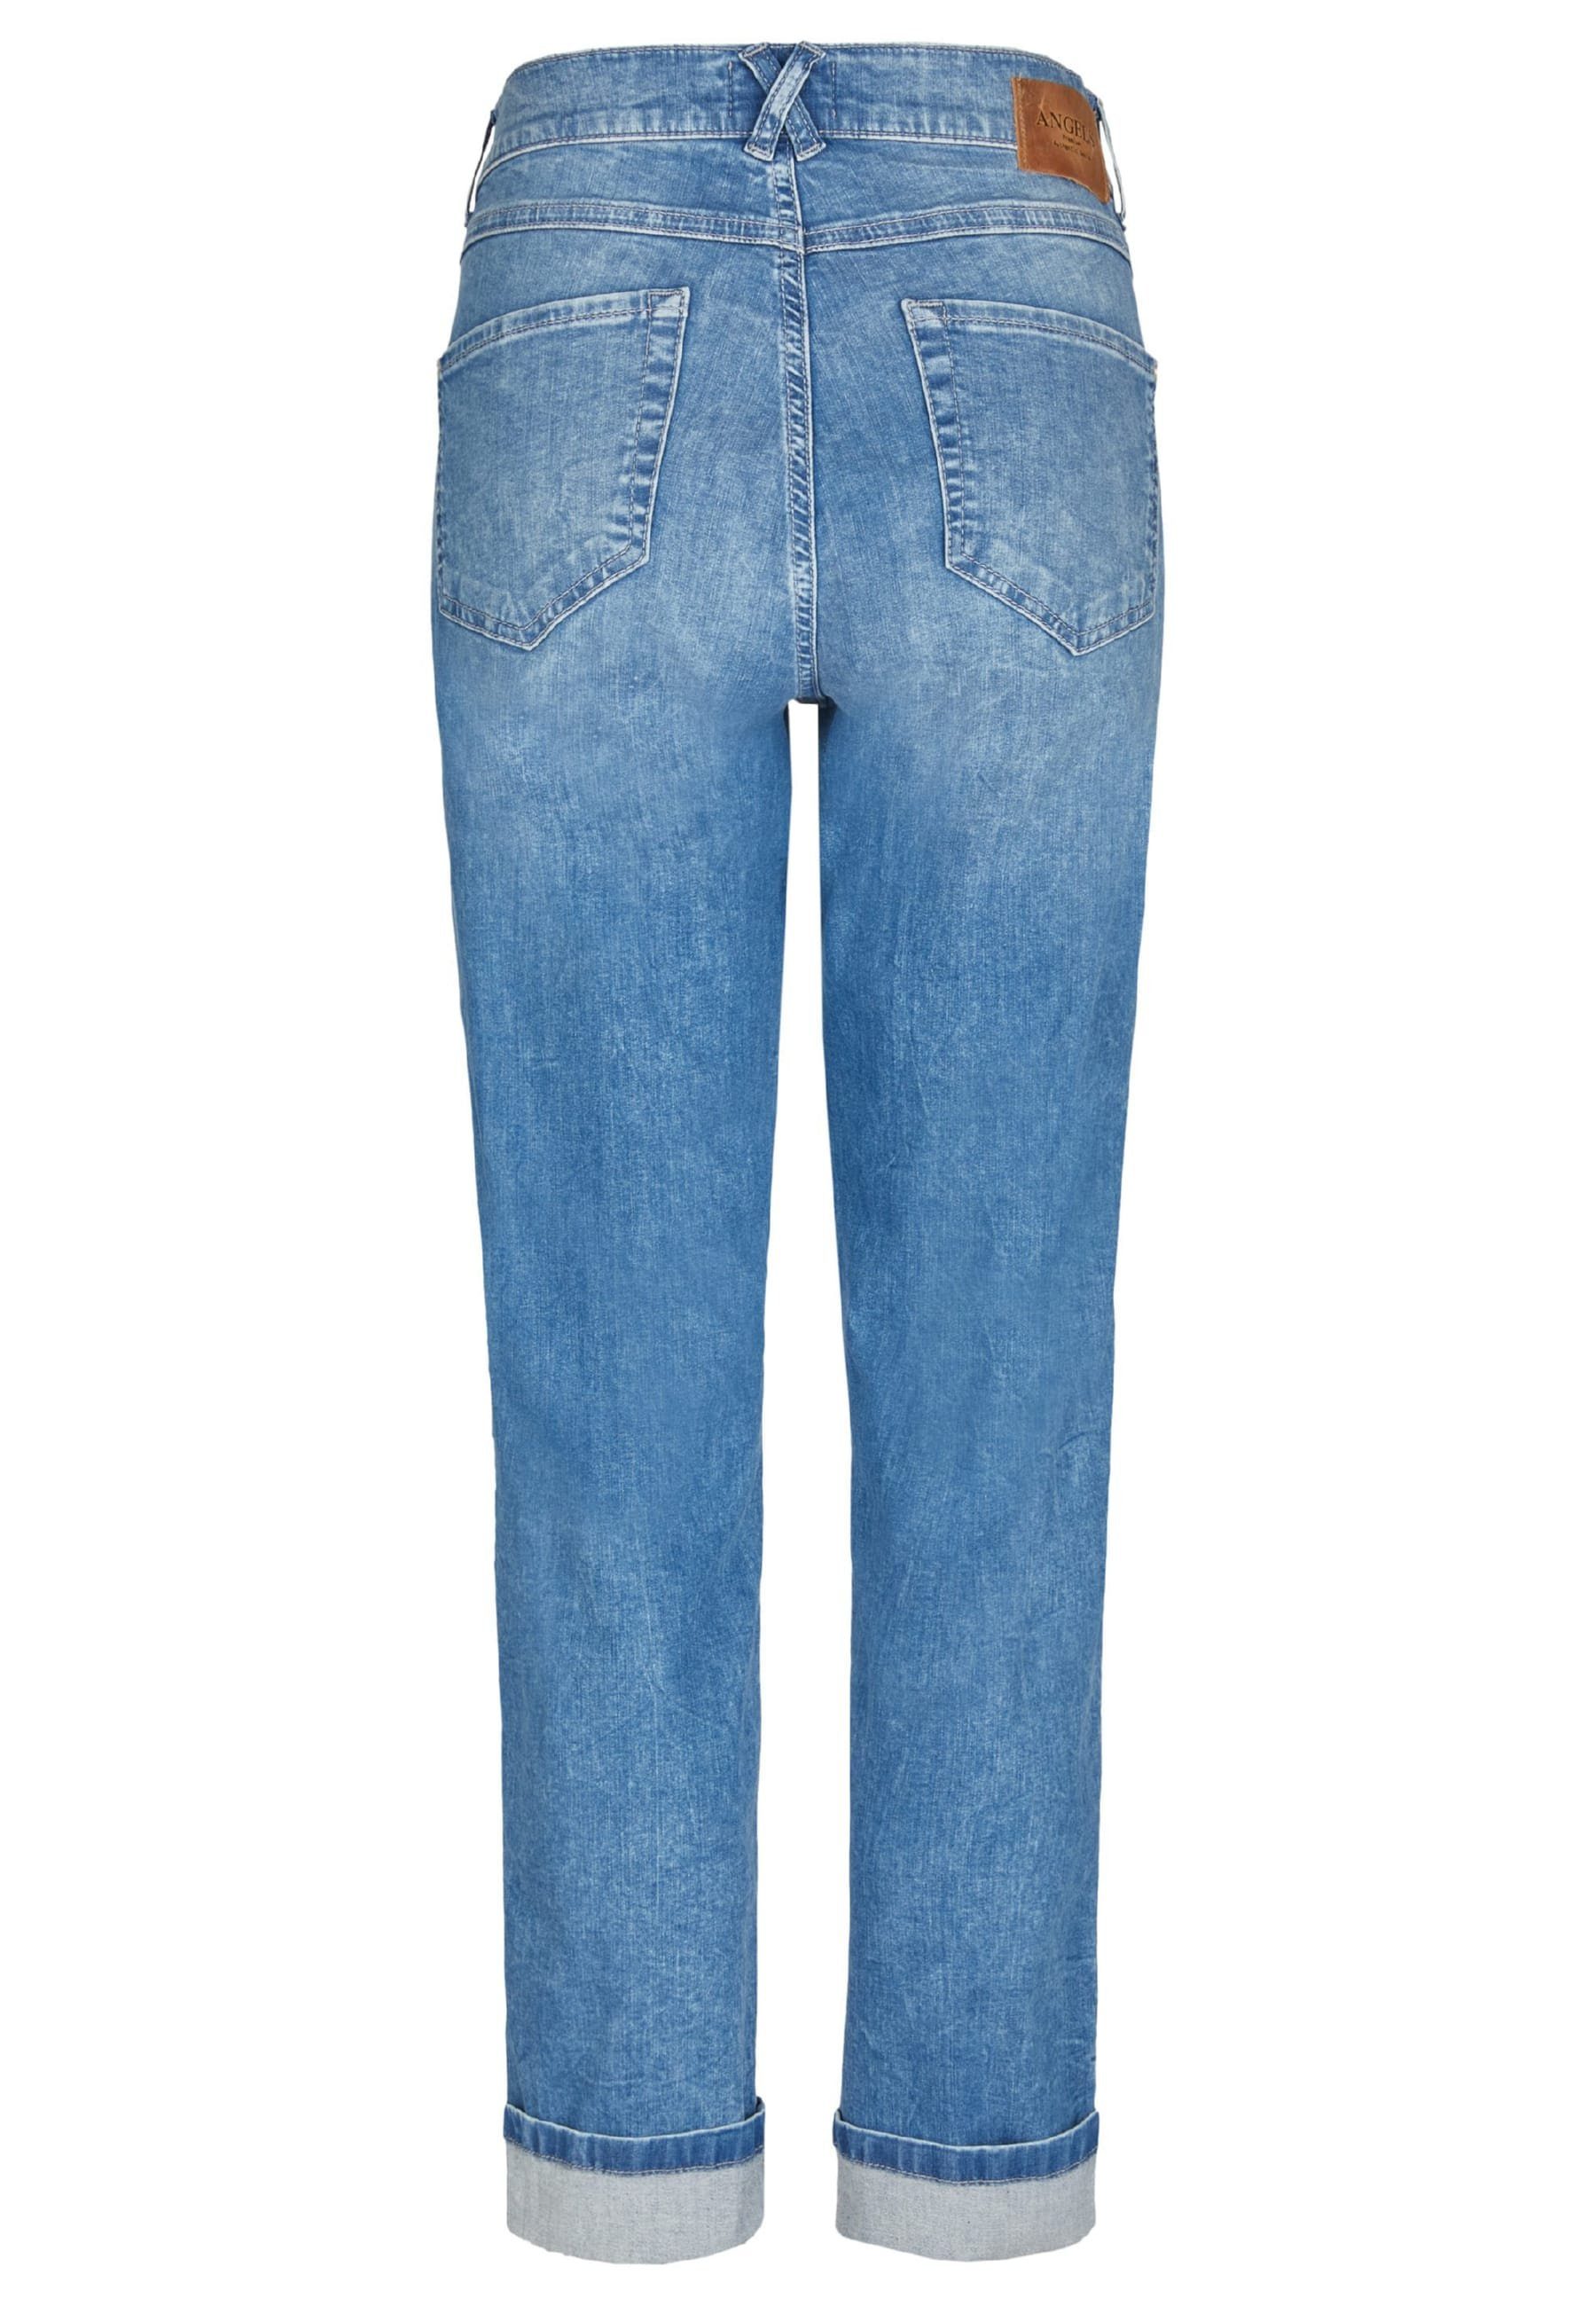 ANGELS 7/8-Jeans Jeans mit Cotton Label-Applikationen TU Darleen Organic Crop mit Ribbon